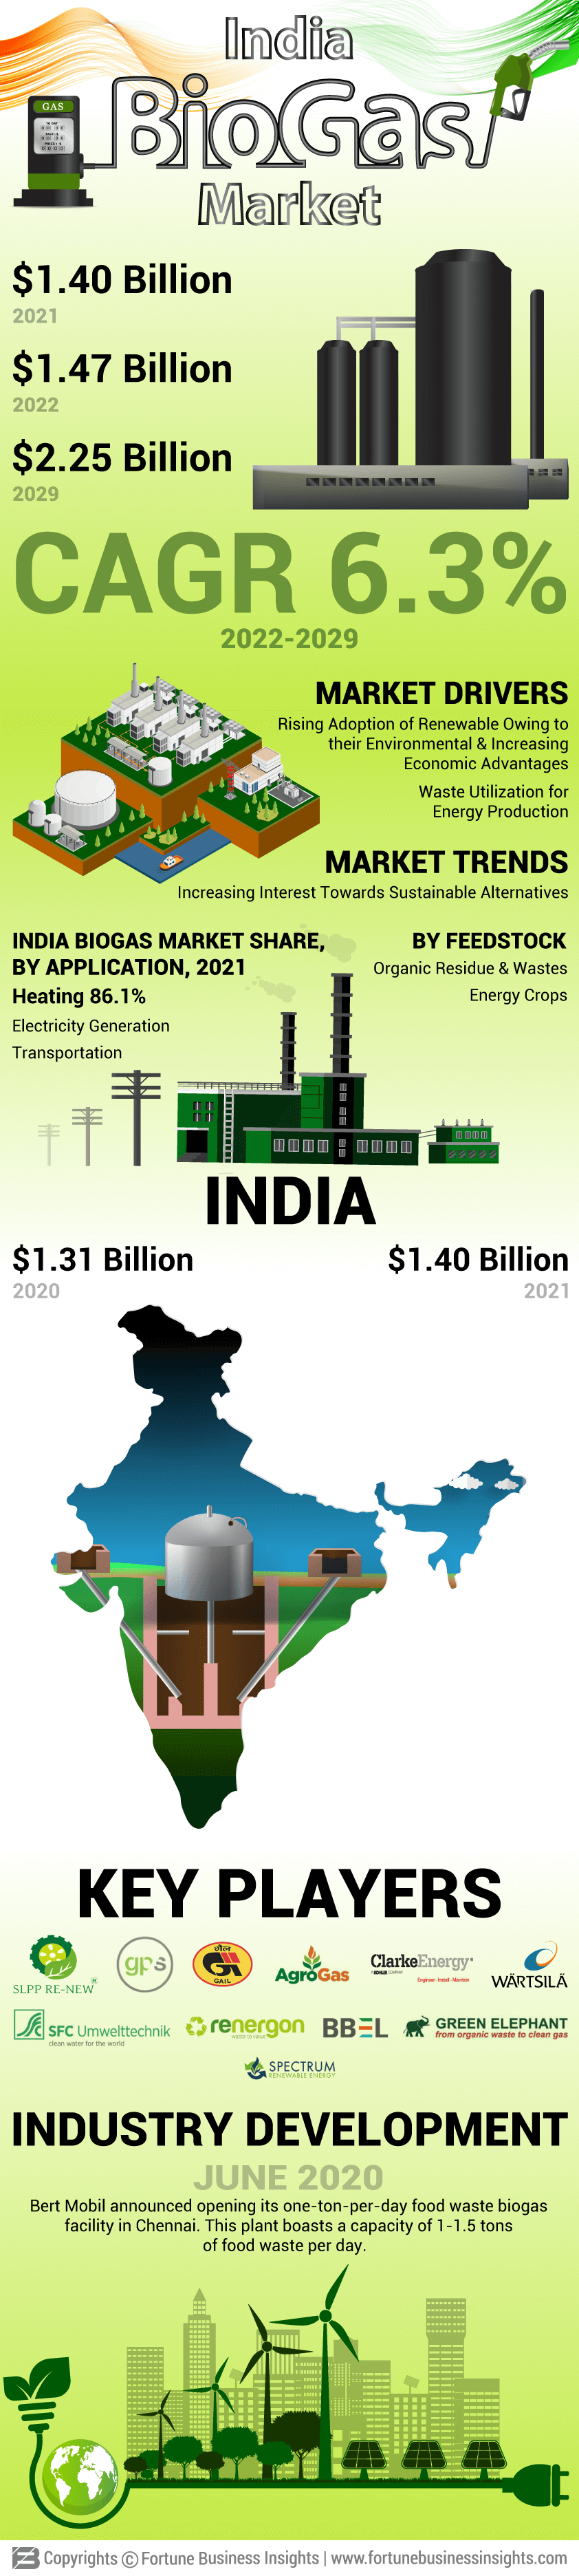 India Biogas Market